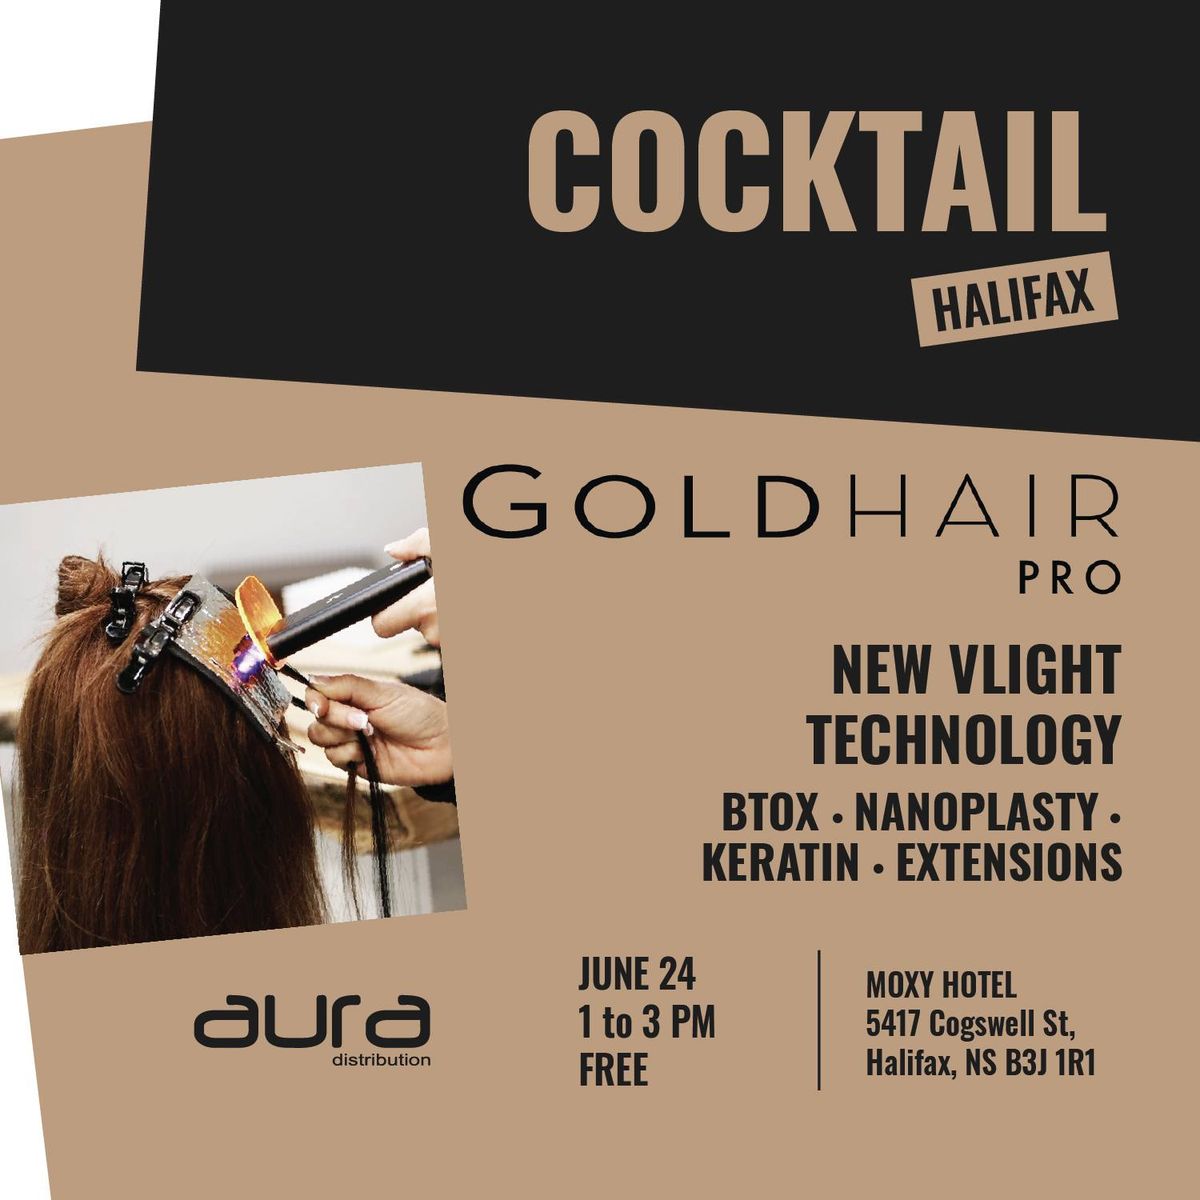 Goldhair Cocktail - Halifax - FREE